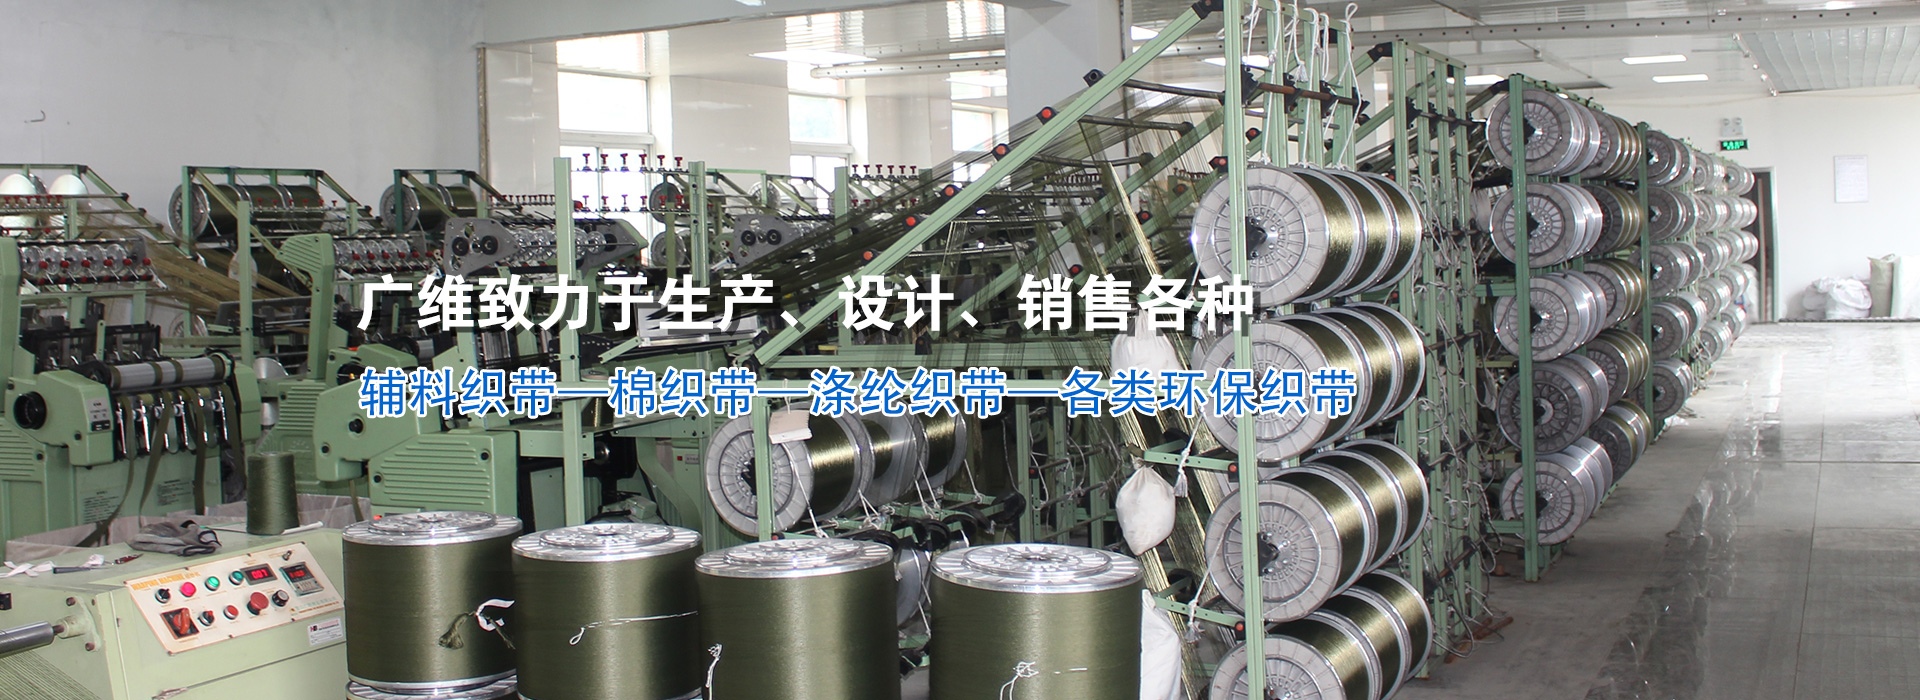  Dandong Guangwei Textile Co., Ltd